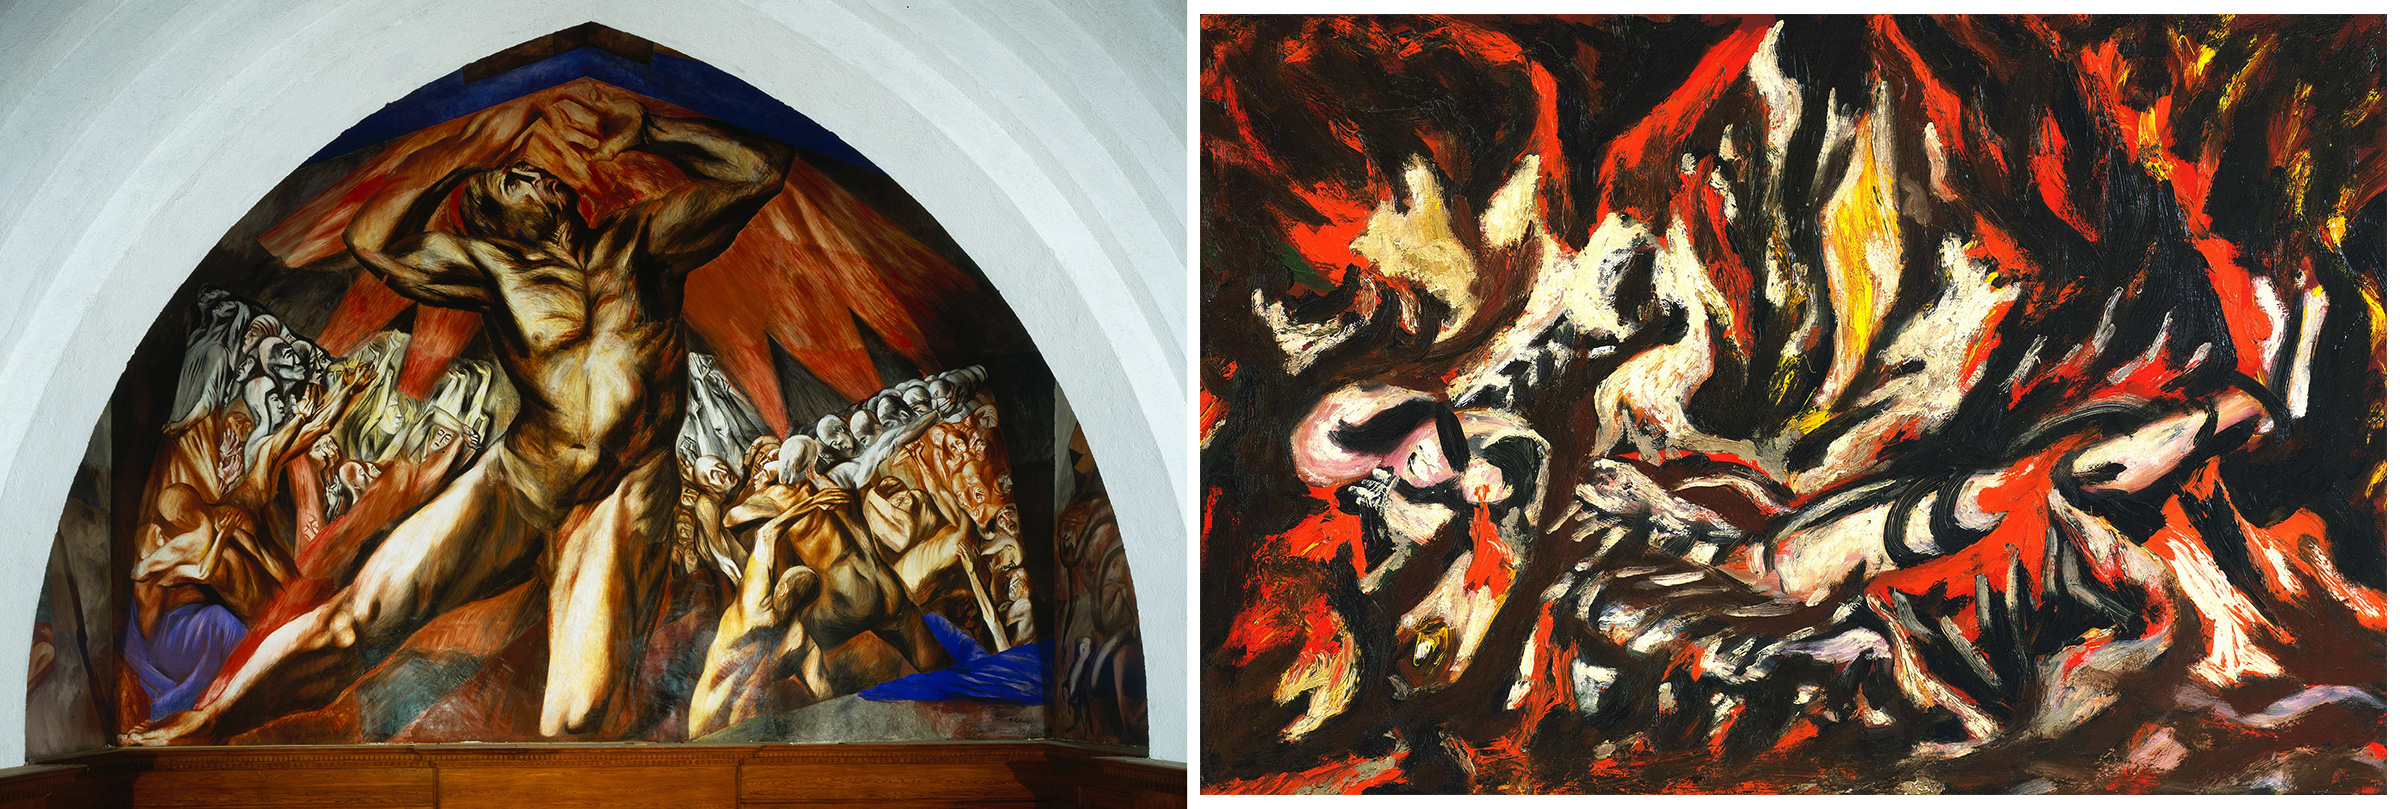 Left: José Clemente Orozco, Reproduction of Prometheus, 1930; Right: Jackson Pollock, The Flame , 1934–38